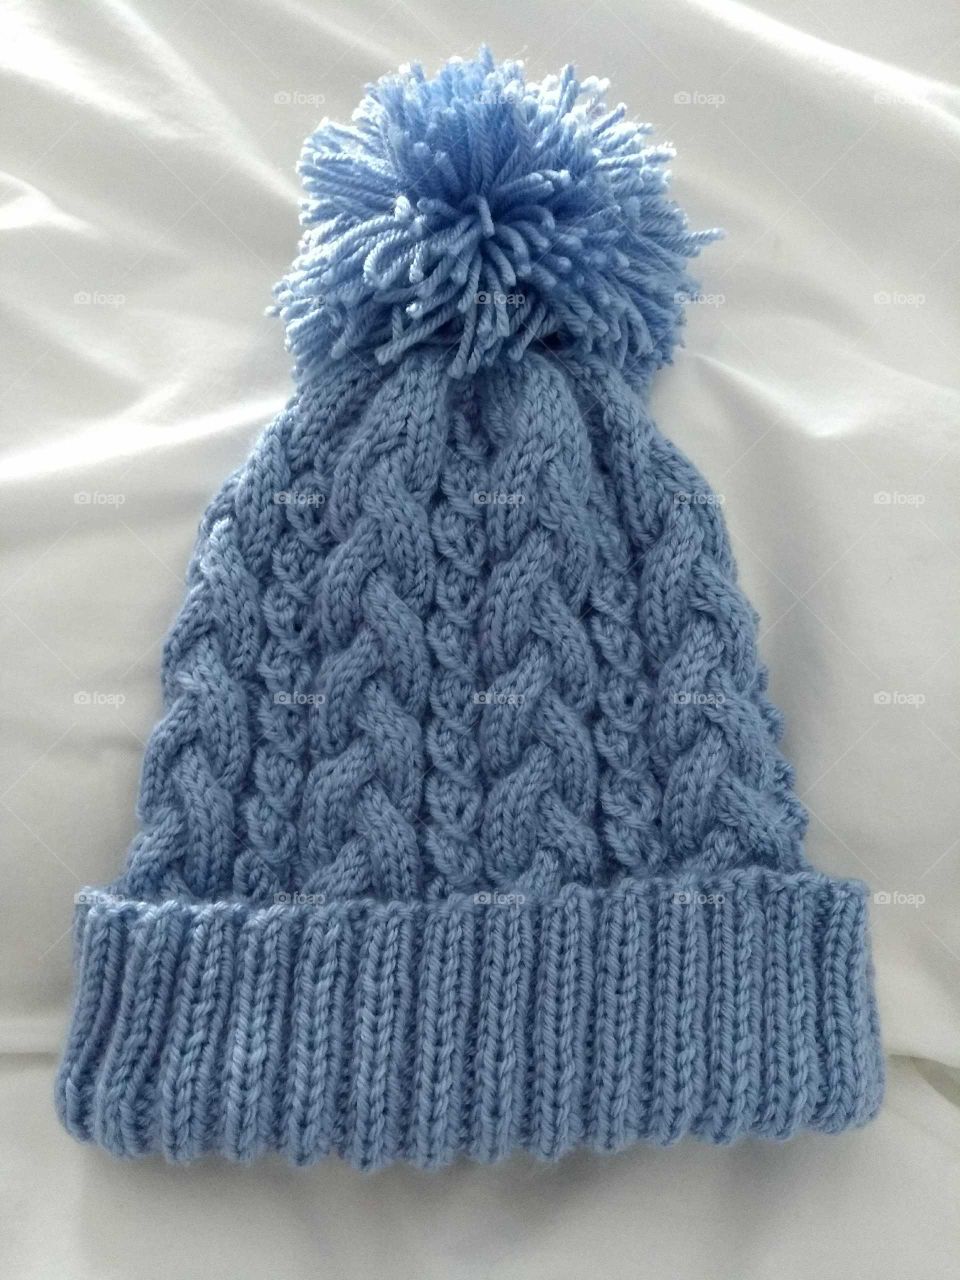 Hand-knit hat